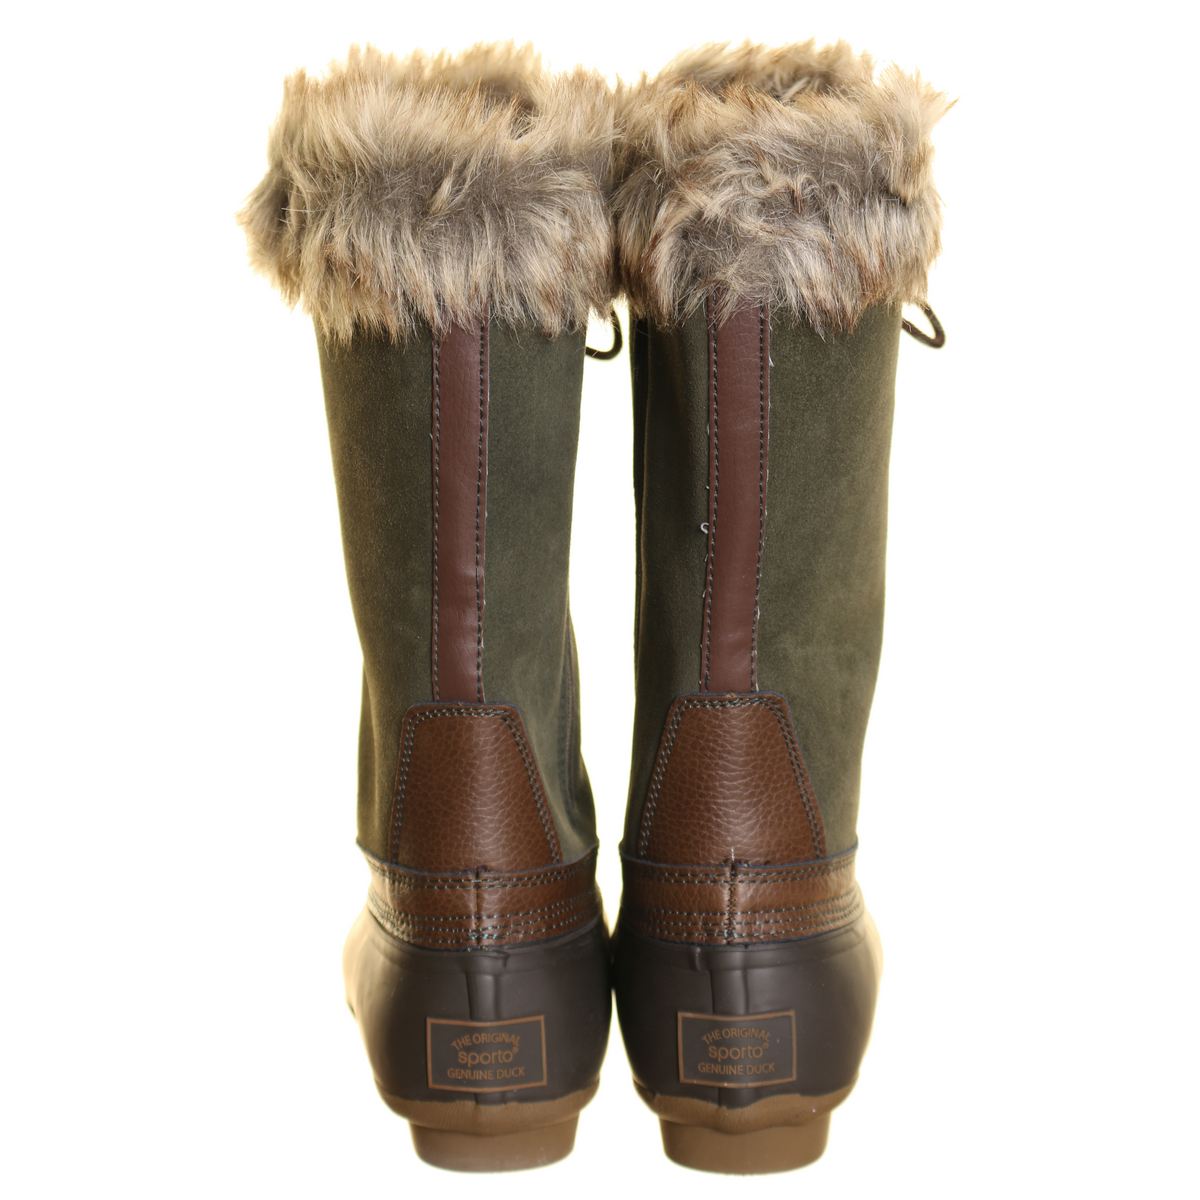 Sporto – Natasha Boots Olive – Size 10M for sale online | eBay